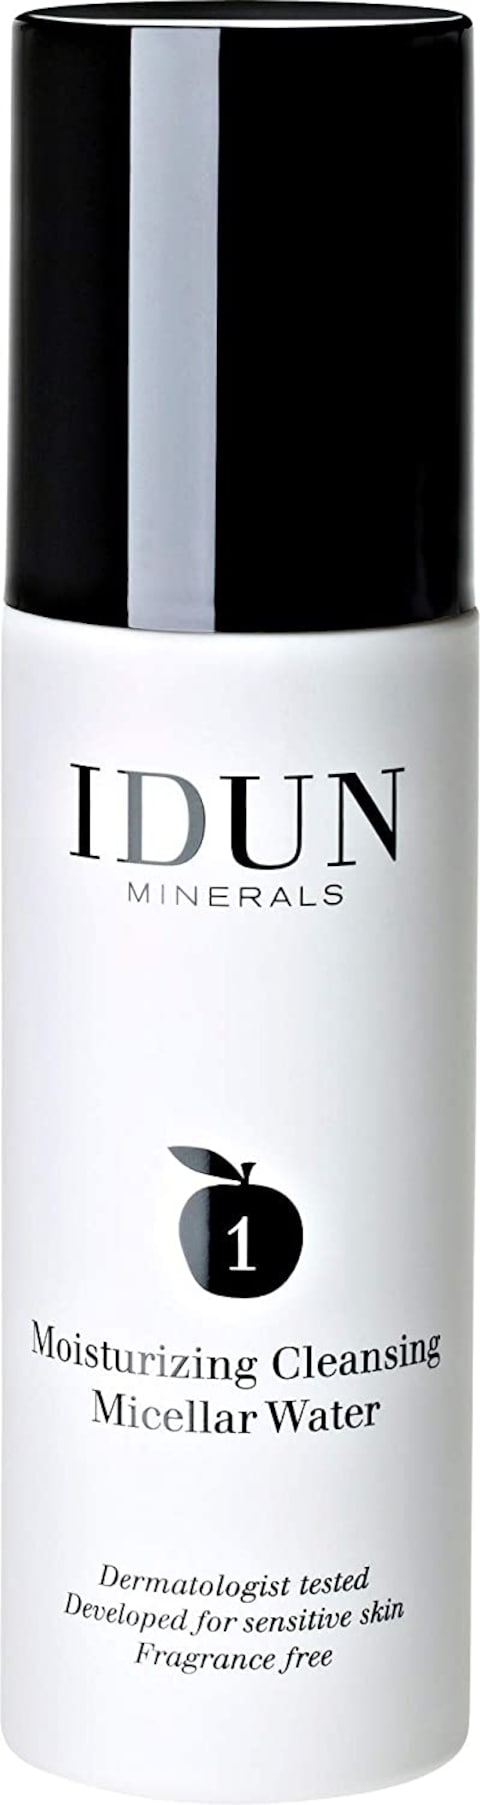 Idun Minerals Moisturizing Cleansing Micellar Water For Unisex - 5 Oz